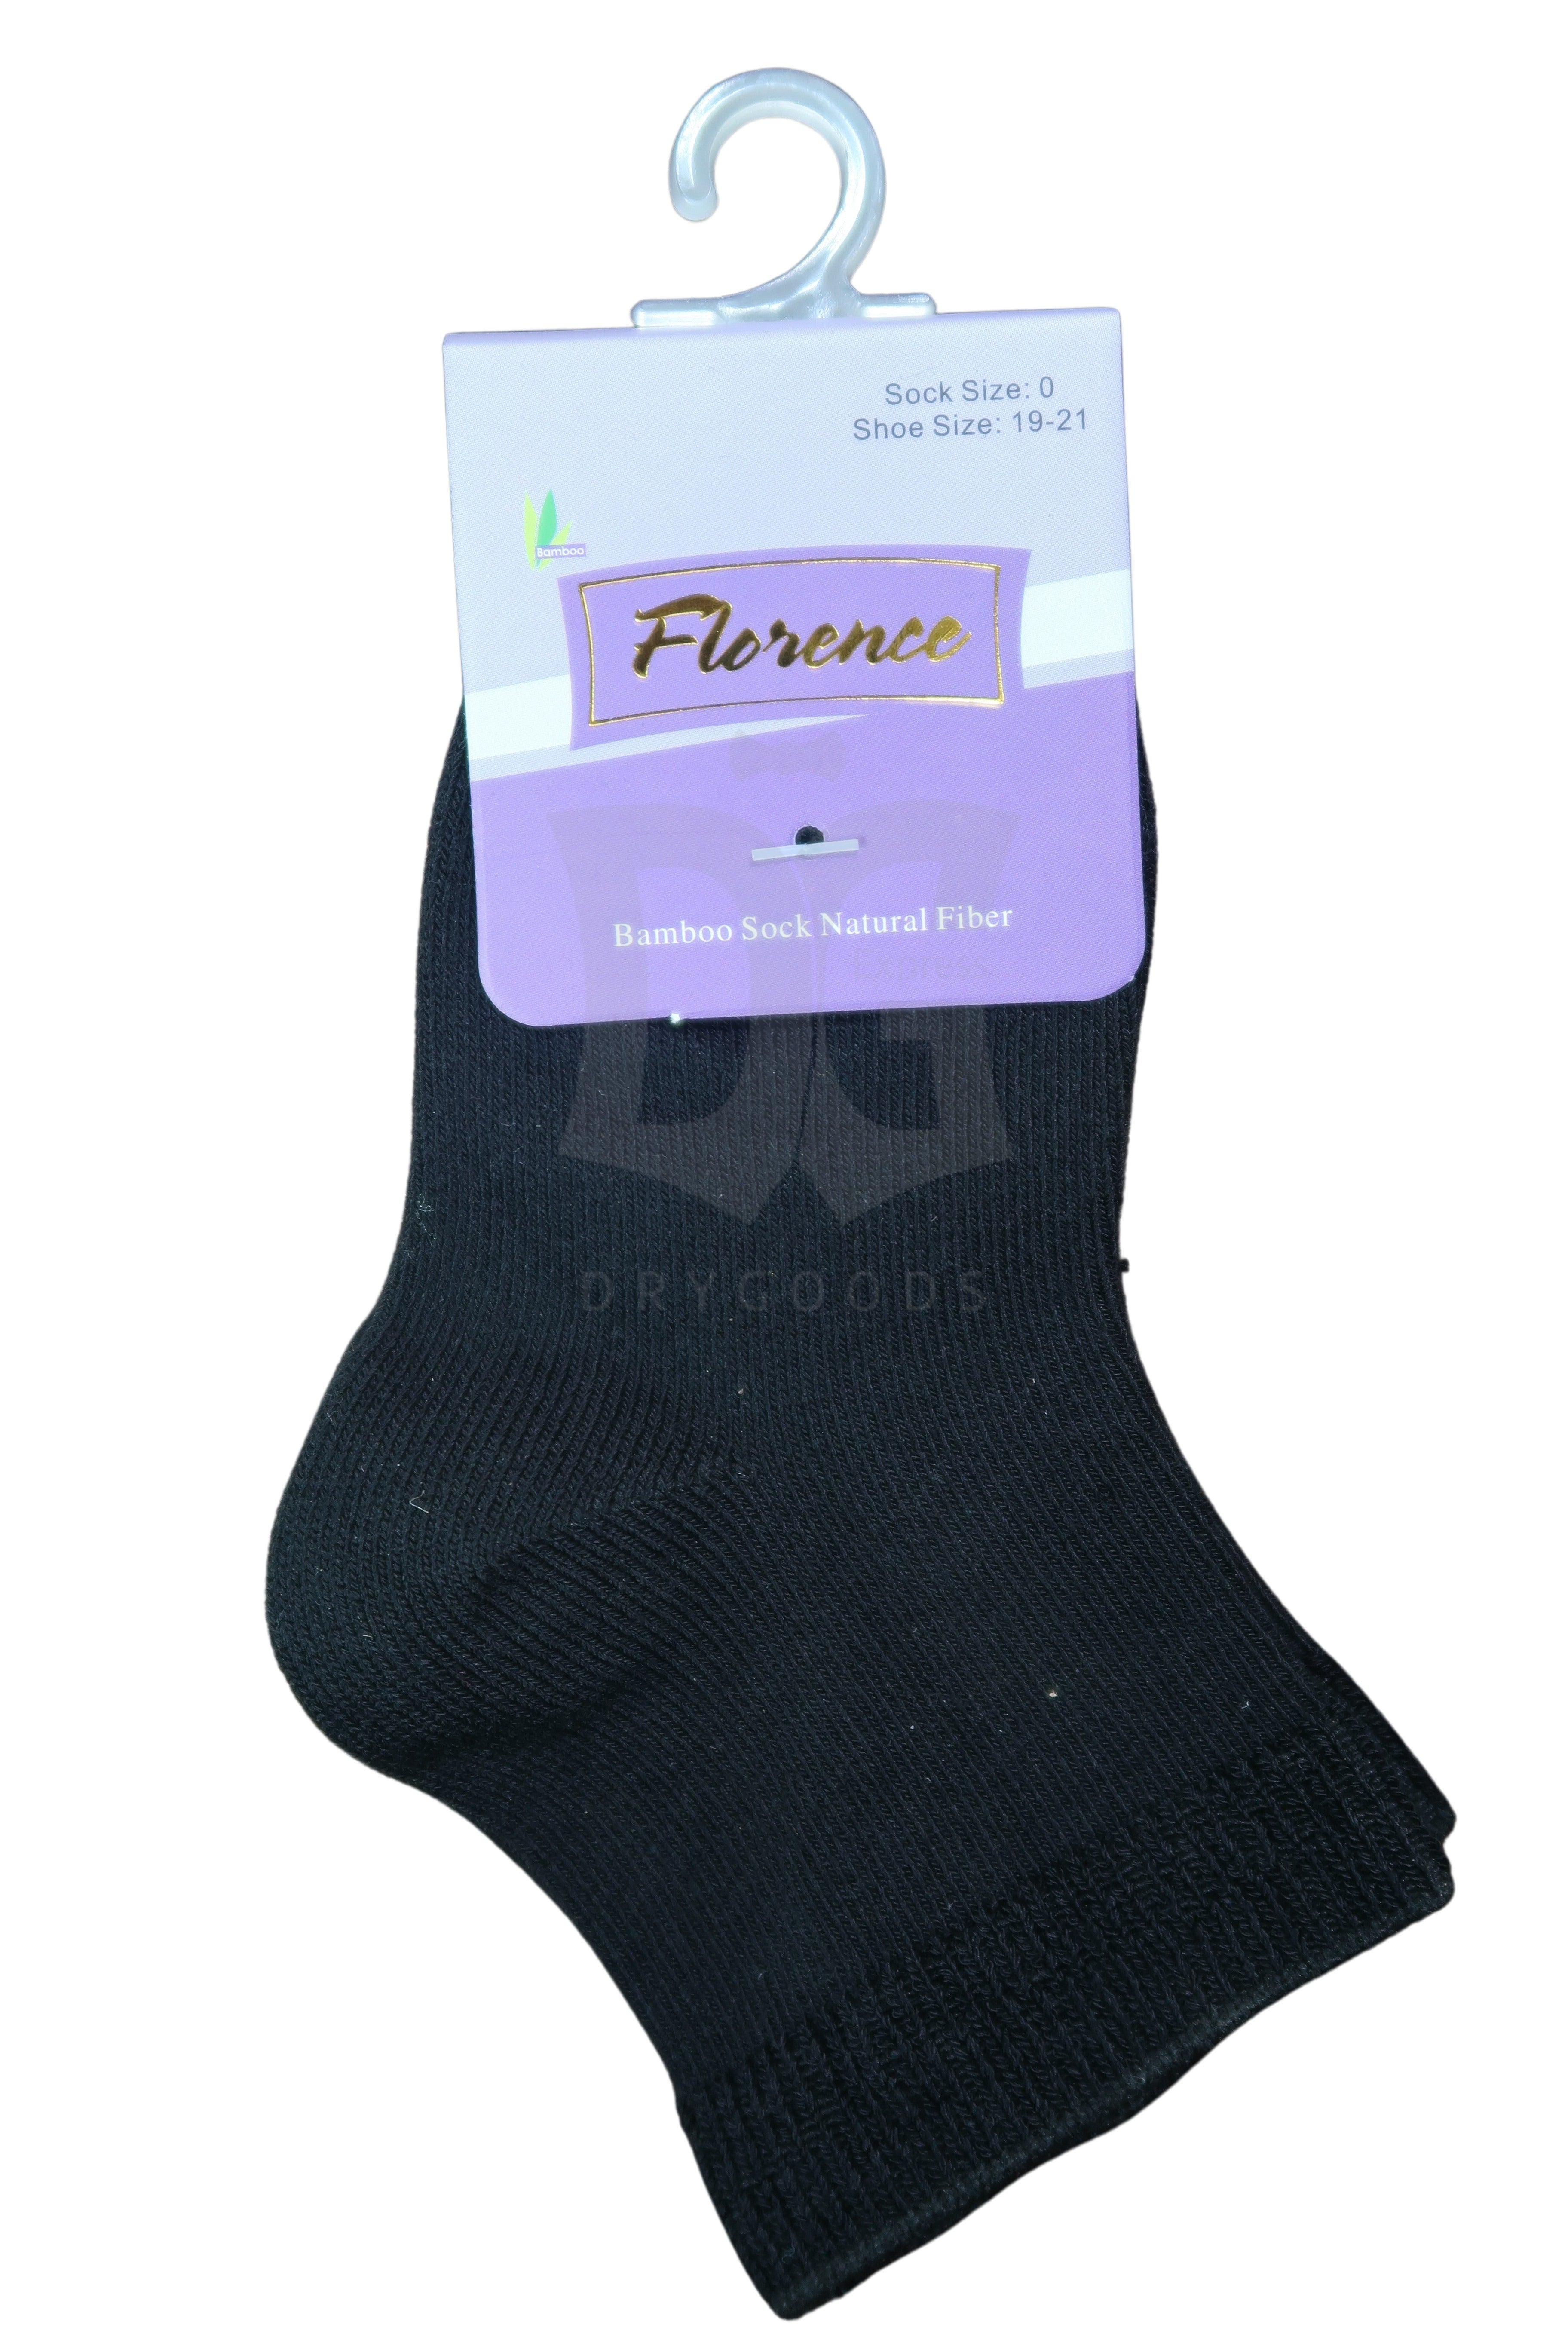 Florence Boy's Crew Socks